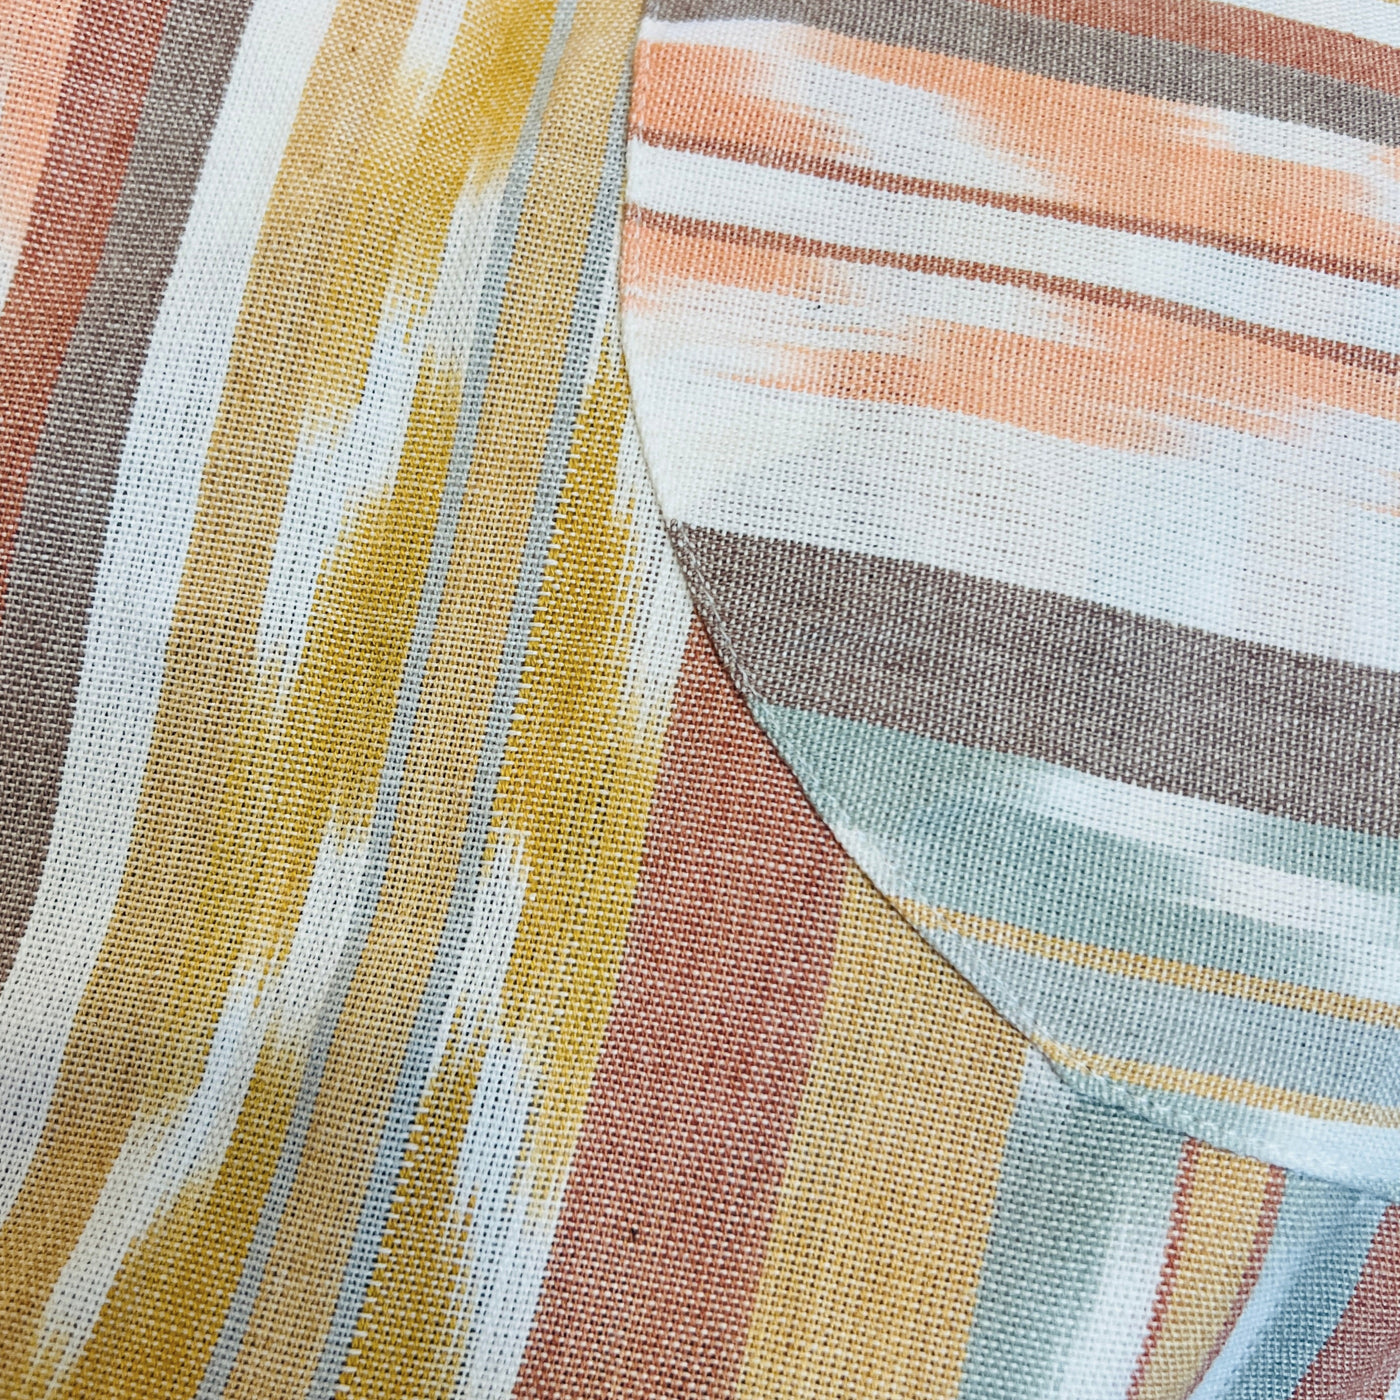 Close up of sand color tone striped design of apron